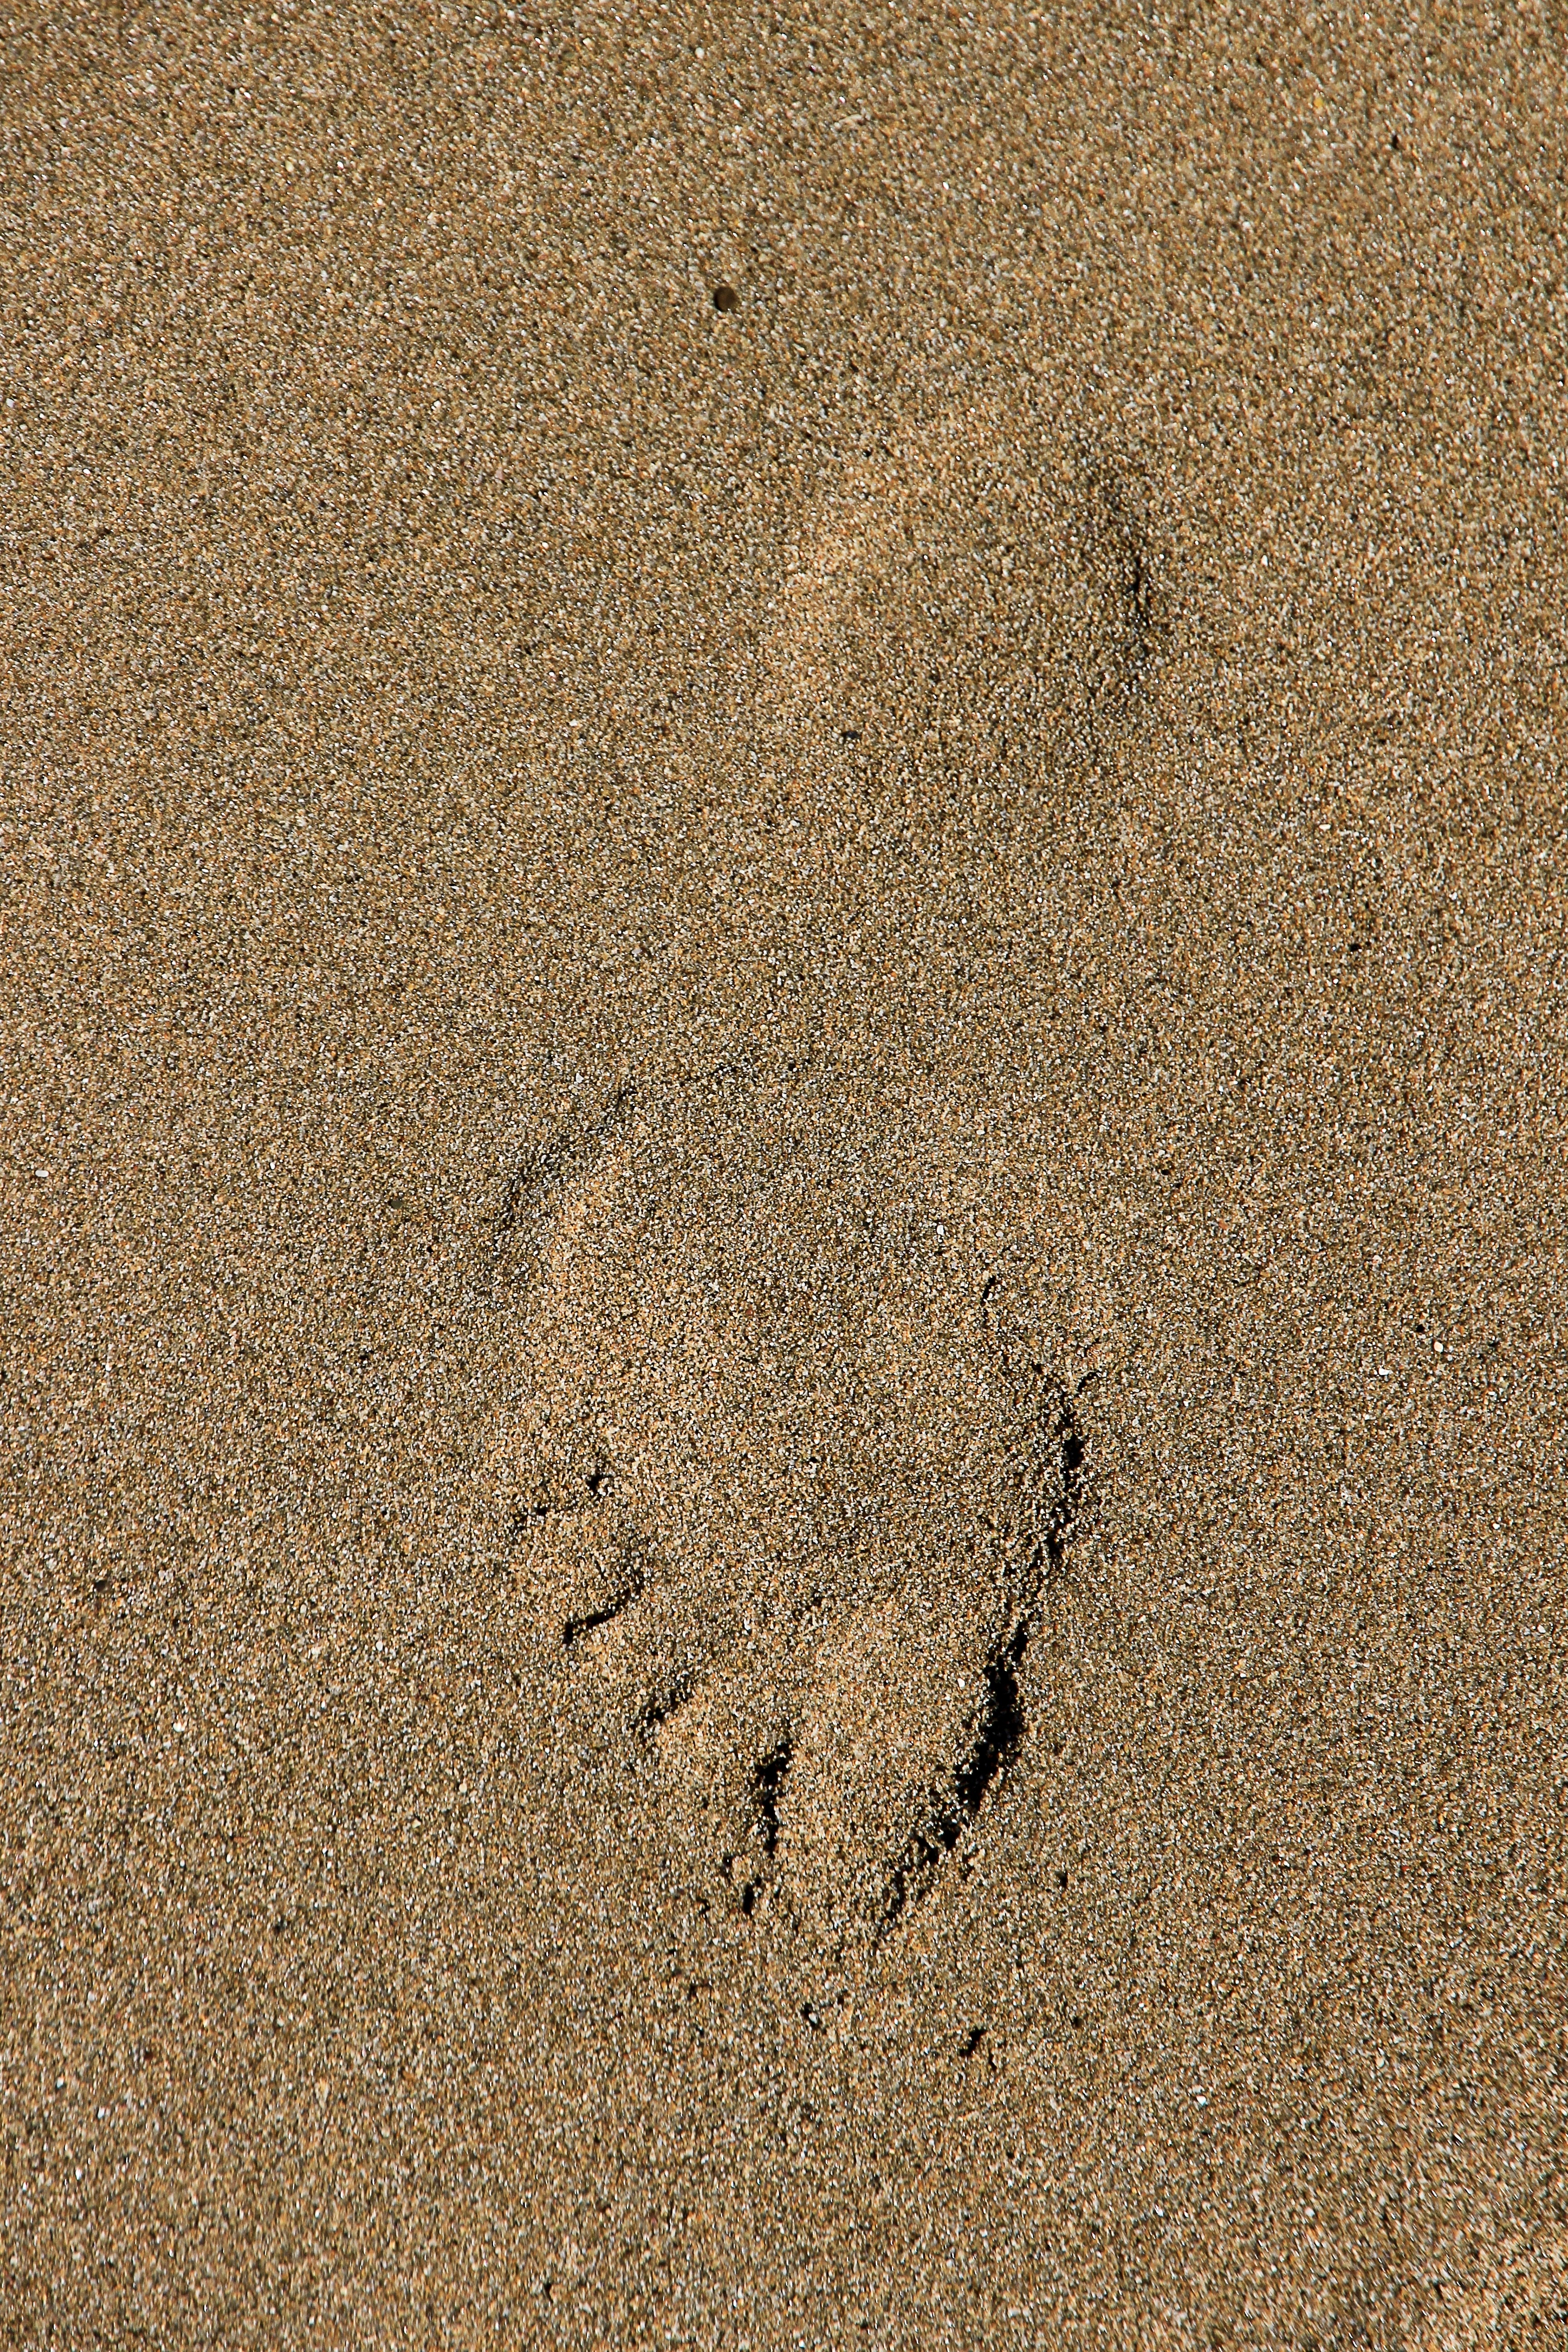 sand foot print